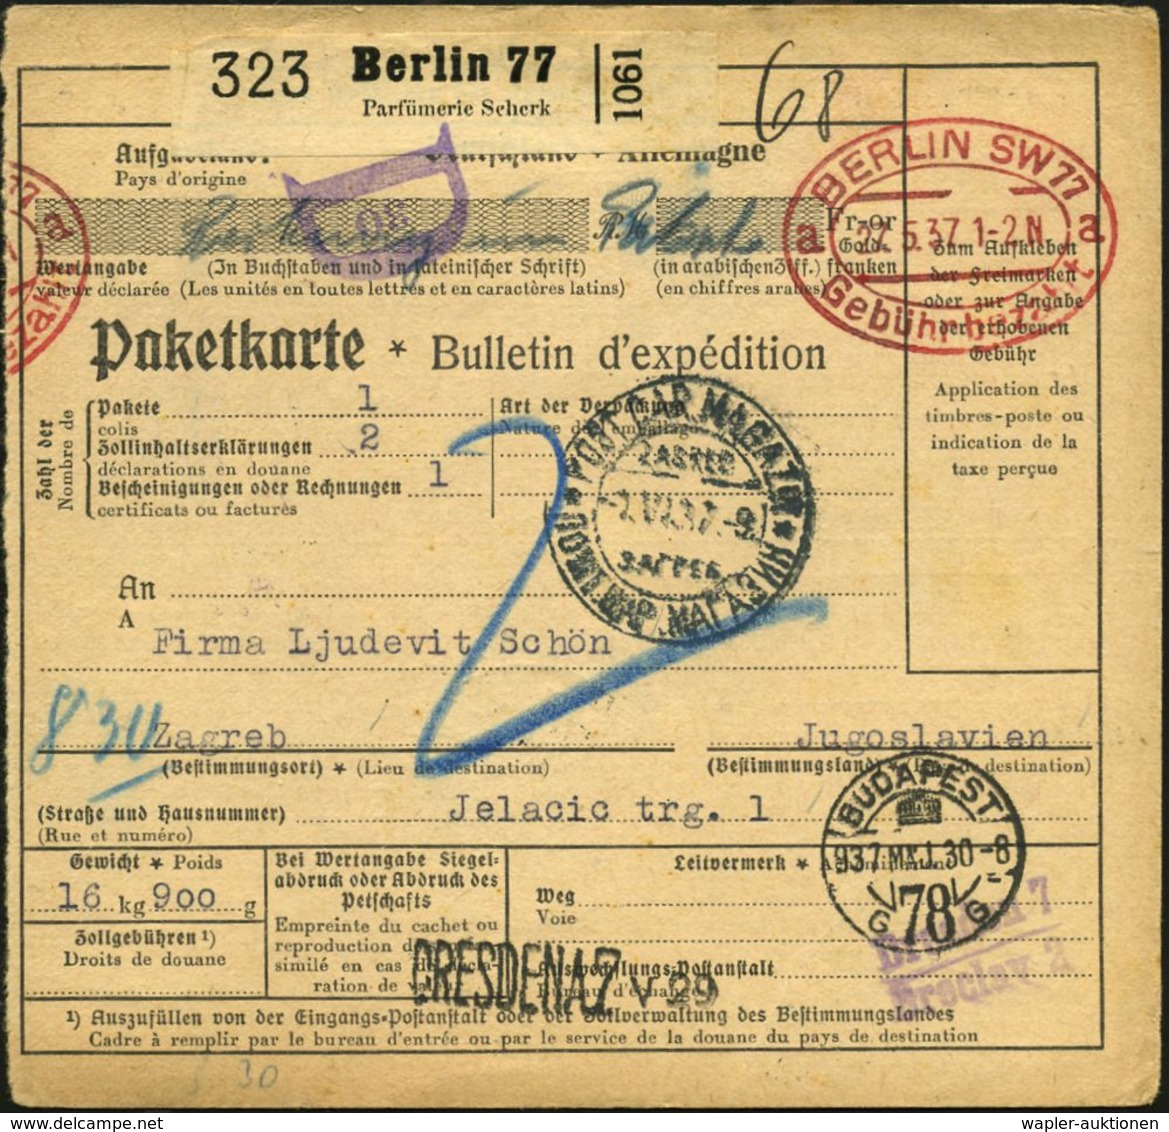 KOSMETIK / PARFÜM : Berlin 77/ Parfümerie Scherk 1937 (27.5.) Selbstbucher-Paketzettel + Ovaler PFS: BERLIN SW77/a A/Geb - Pharmacie